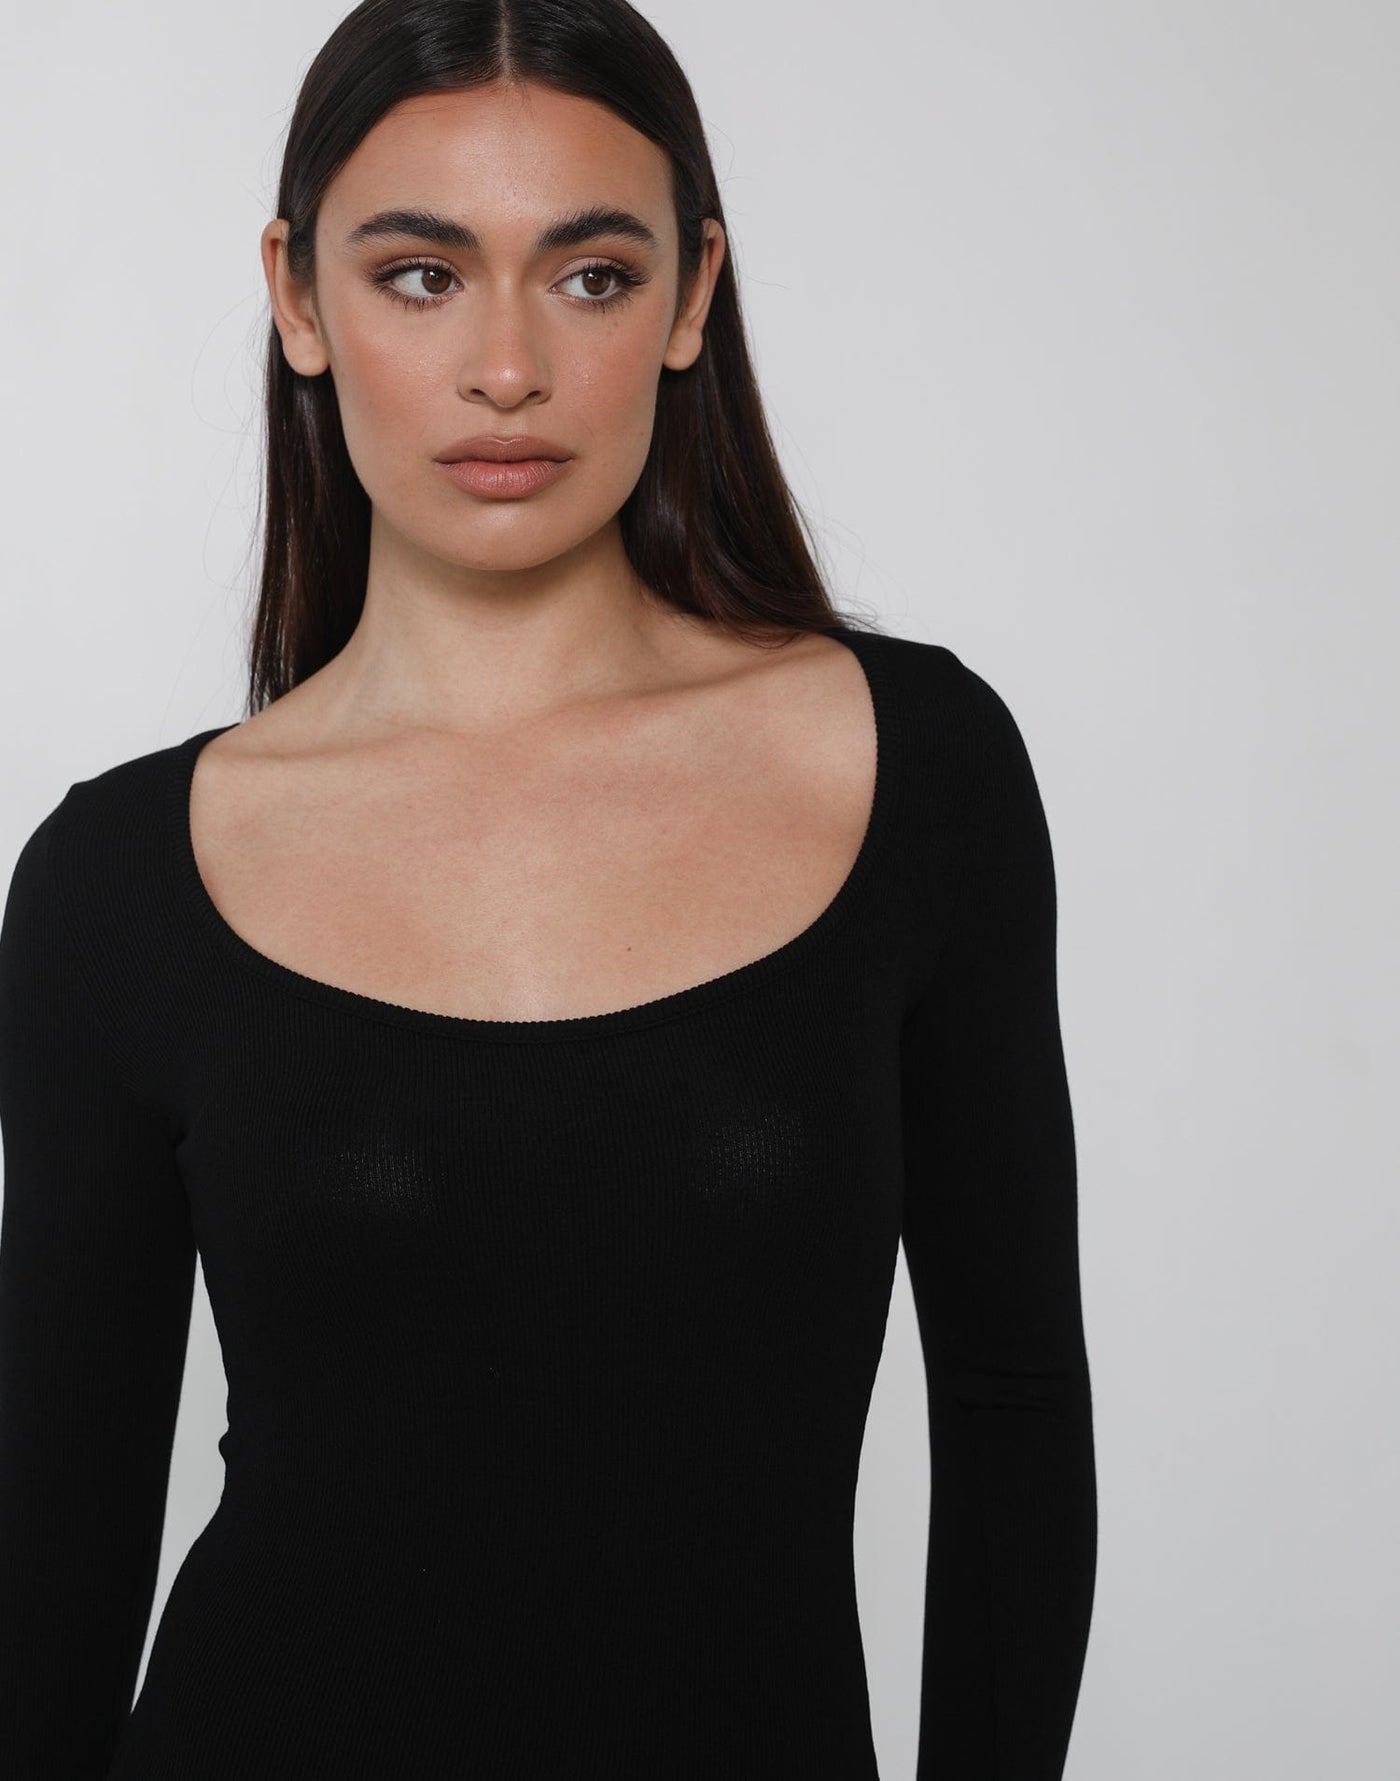 Zamira Long Sleeve Maxi Dress (Black) - Black Long Sleeve Maxi Dress - Women's Dress - Charcoal Clothing